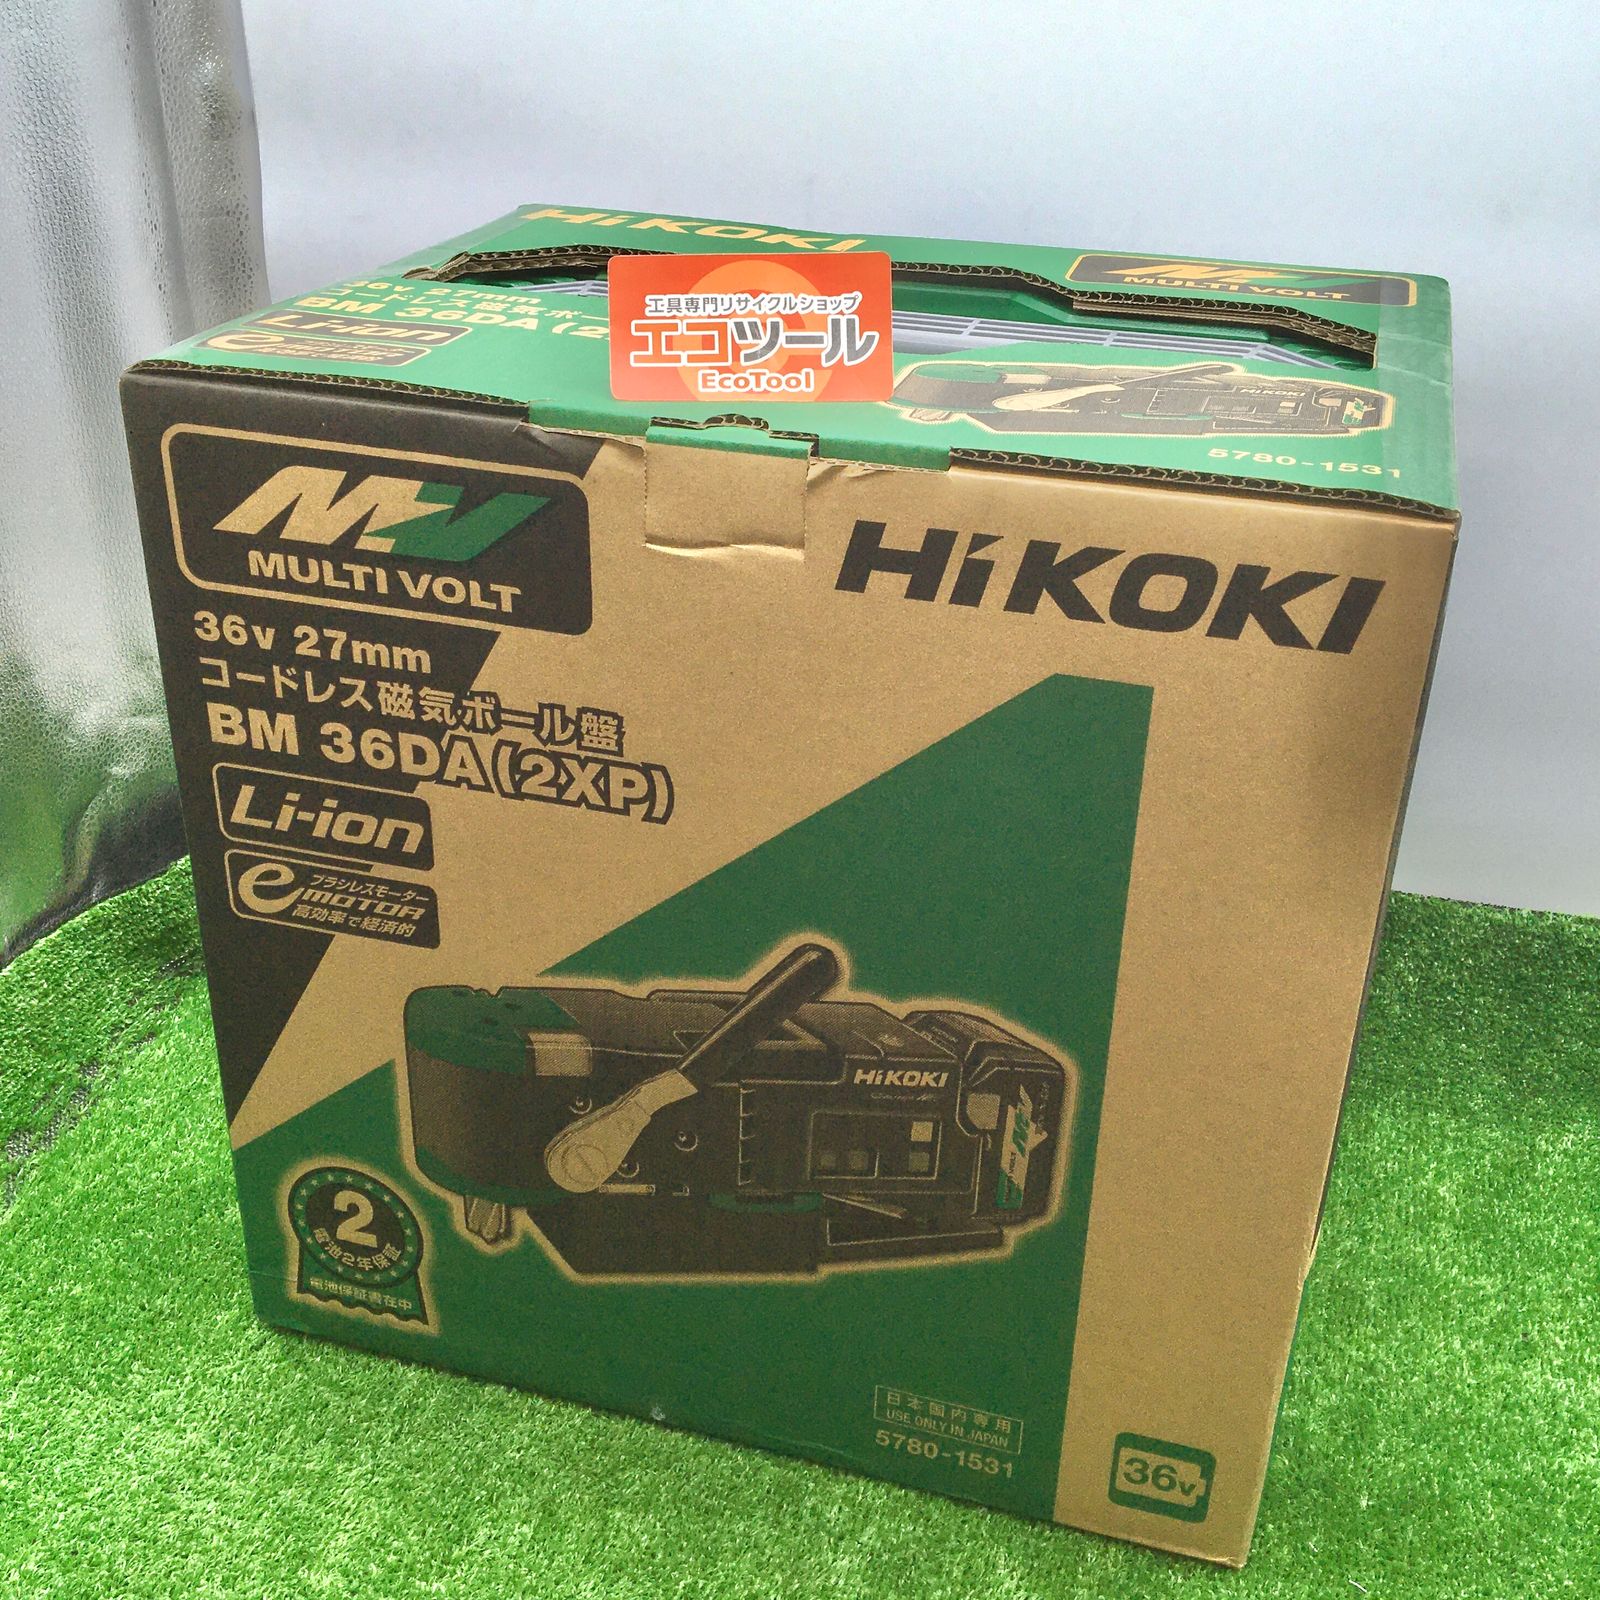 ☆HiKOKI/ハイコーキ 36Vコードレス磁気ボール盤 BM36DA(2XP) [ITLEEURNNCV0] 工具專門リサイクルショップ  エコツール メルカリ